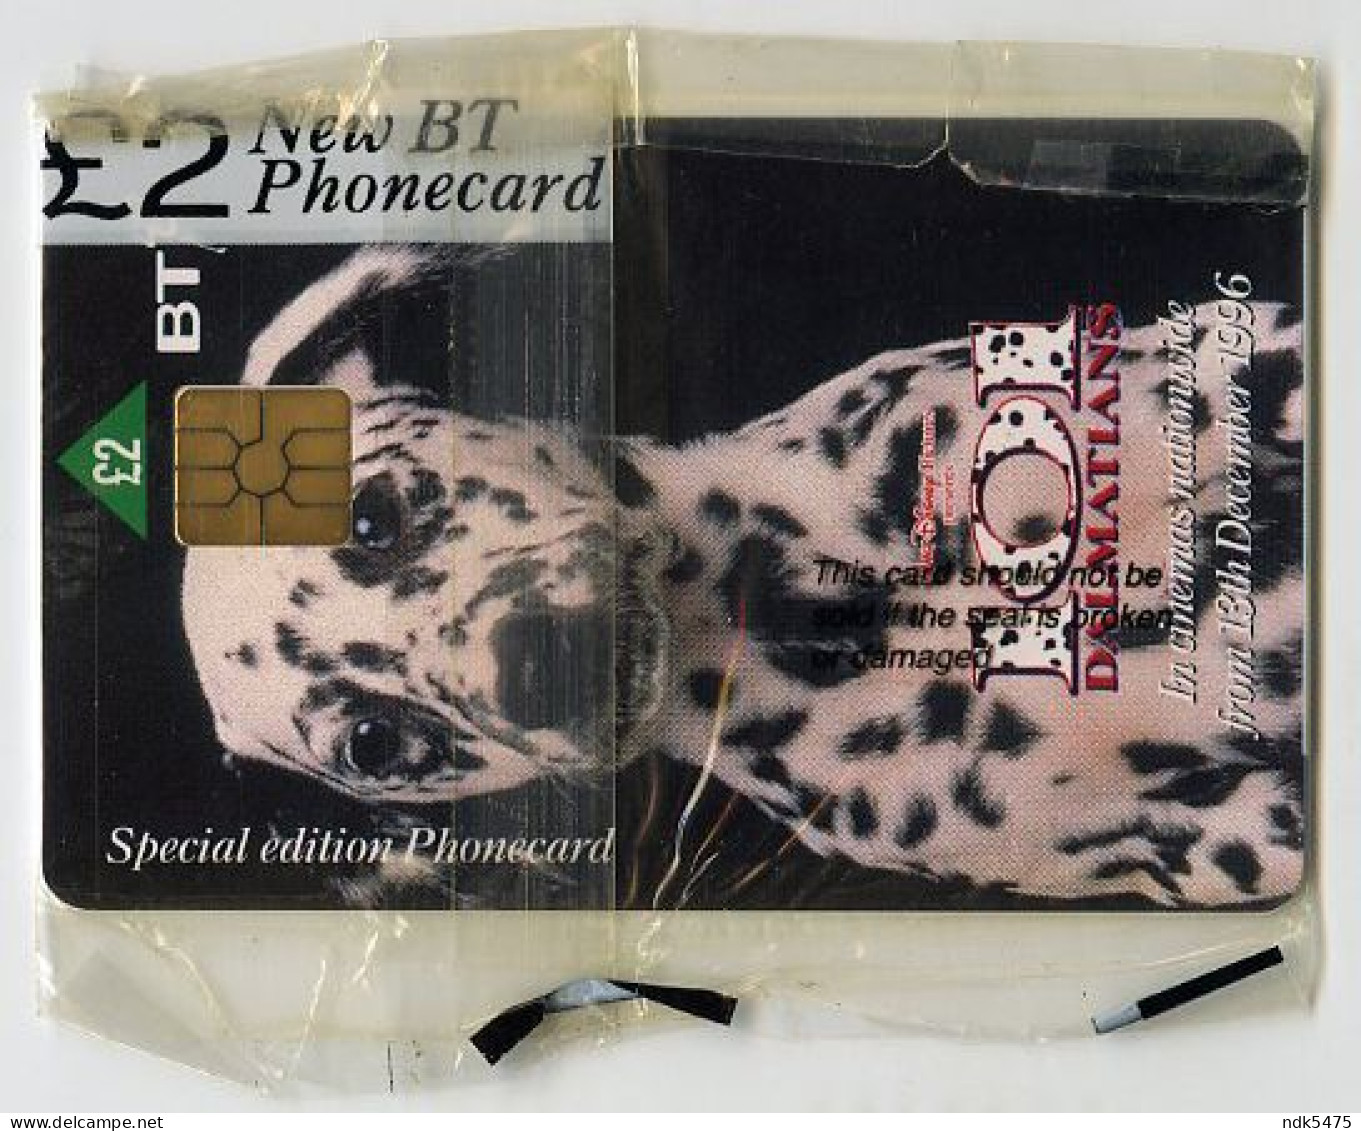 BT PHONECARD : 101 DALMATIONS - 1996 FILM : £2 - BT Promotional